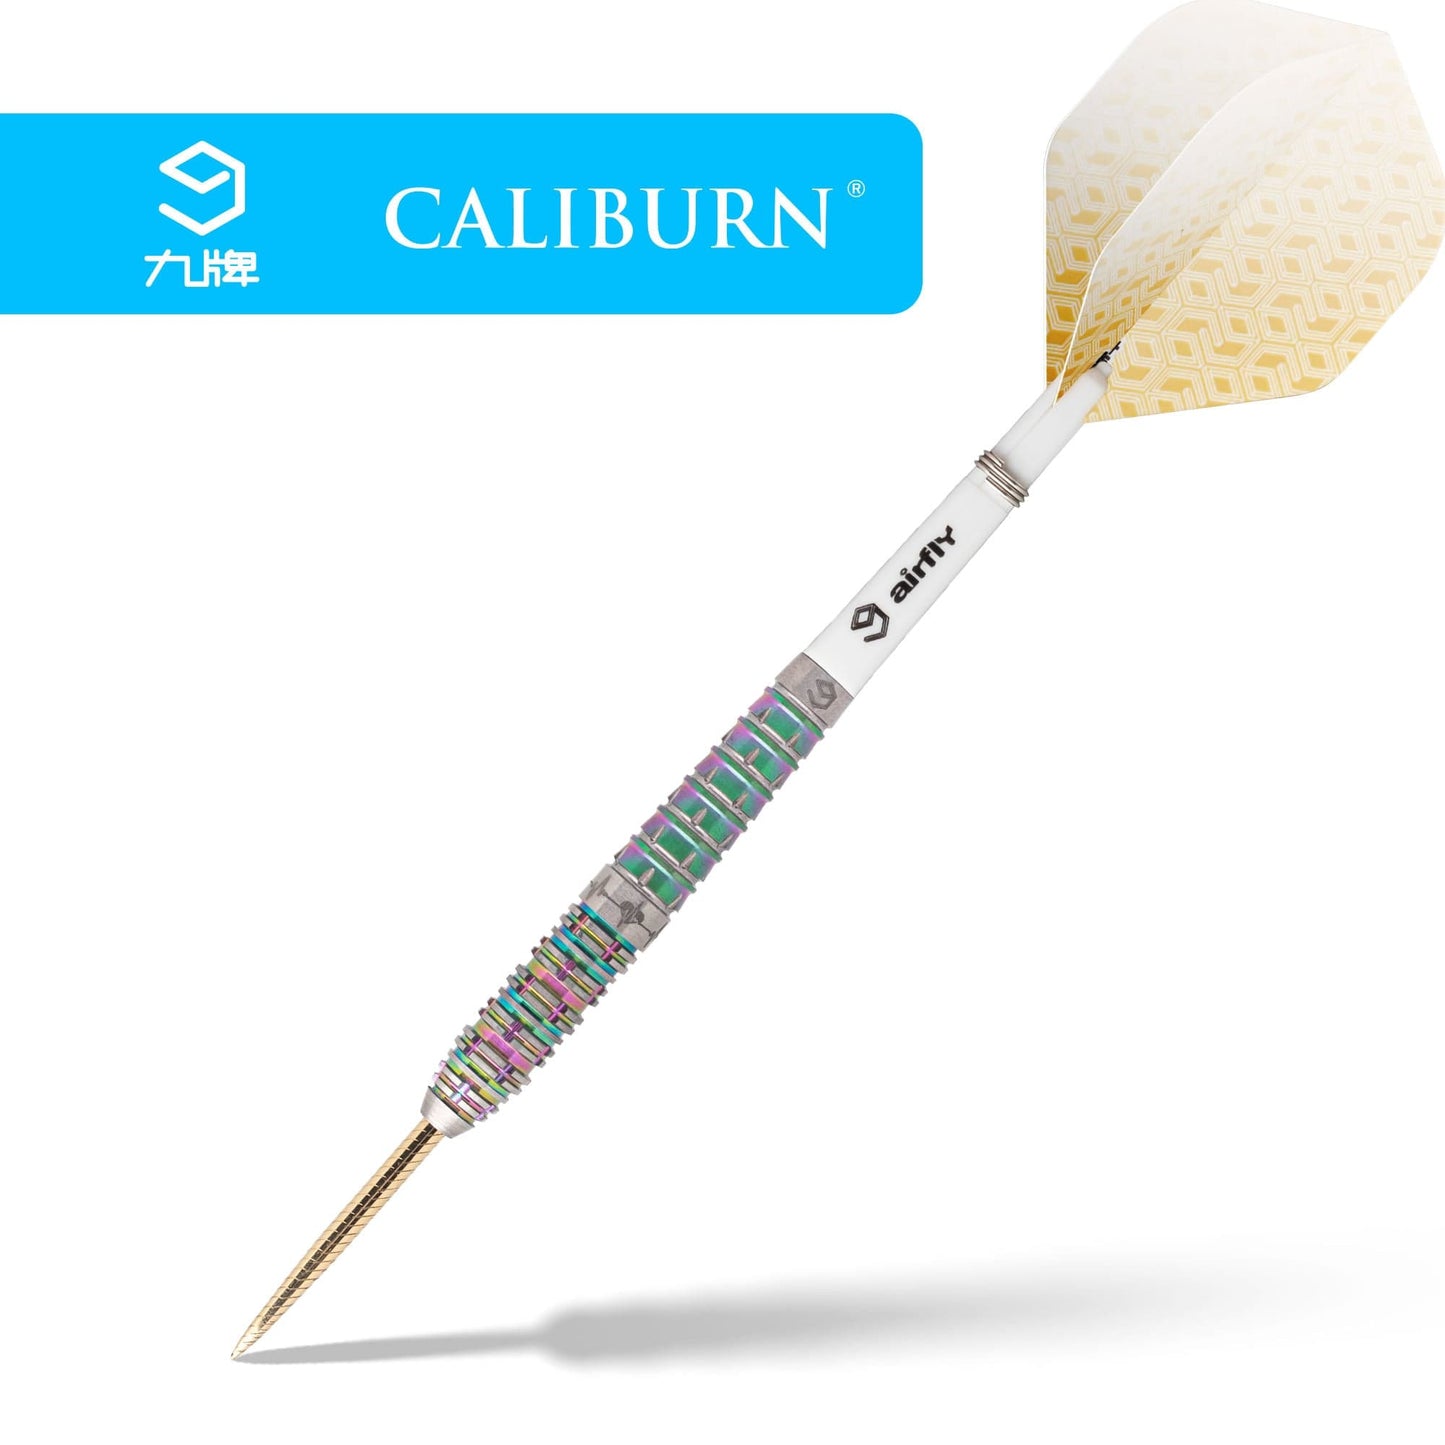 Caliburn Player Darts - Steel Tip - 95% - Rainbow Coating - Raine 22g